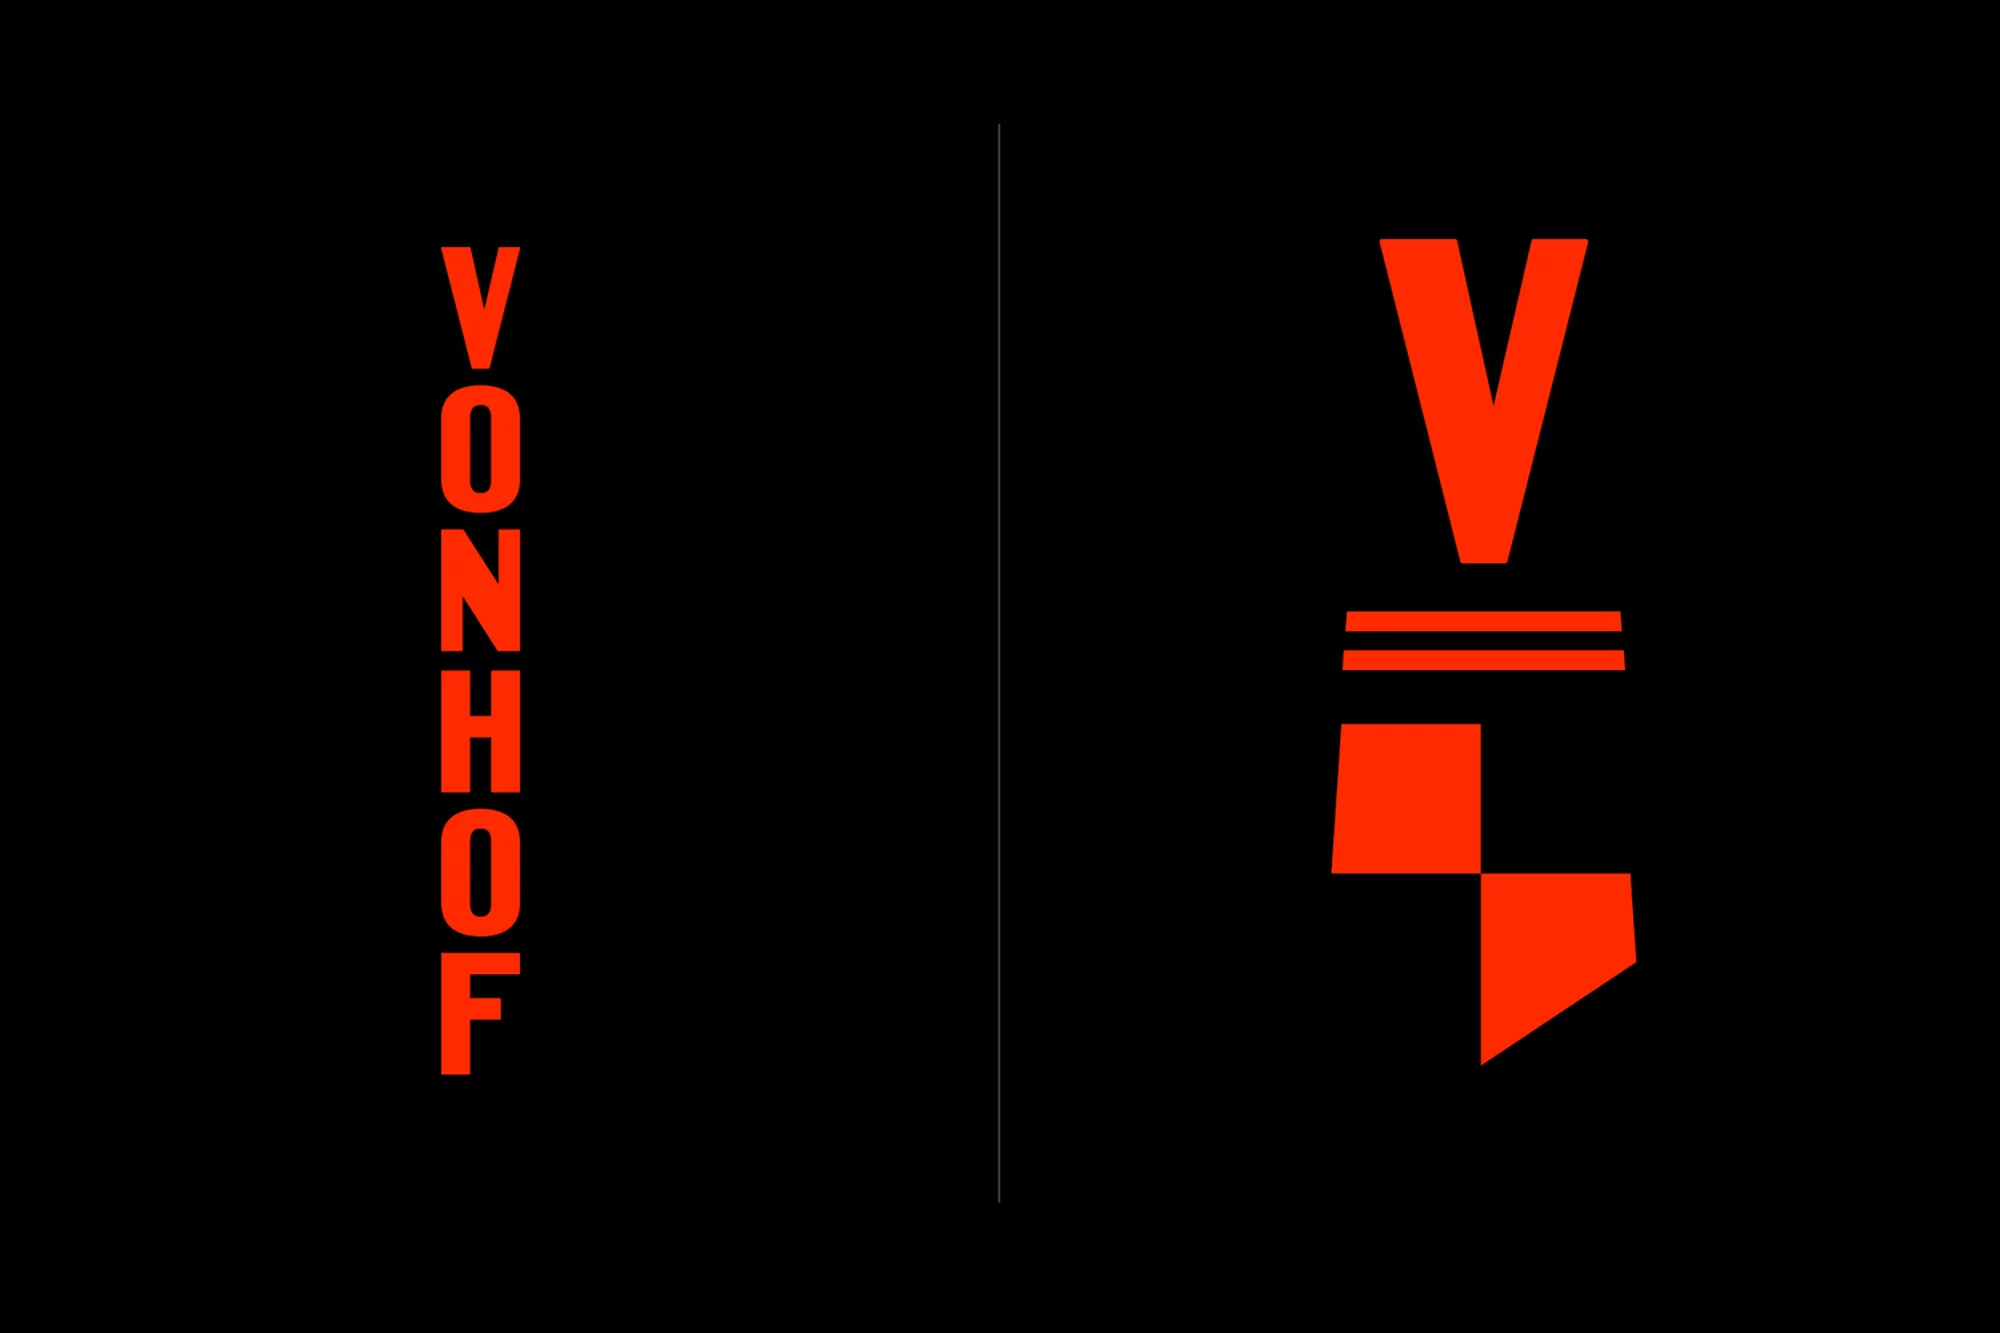 VonHof by Franklyn